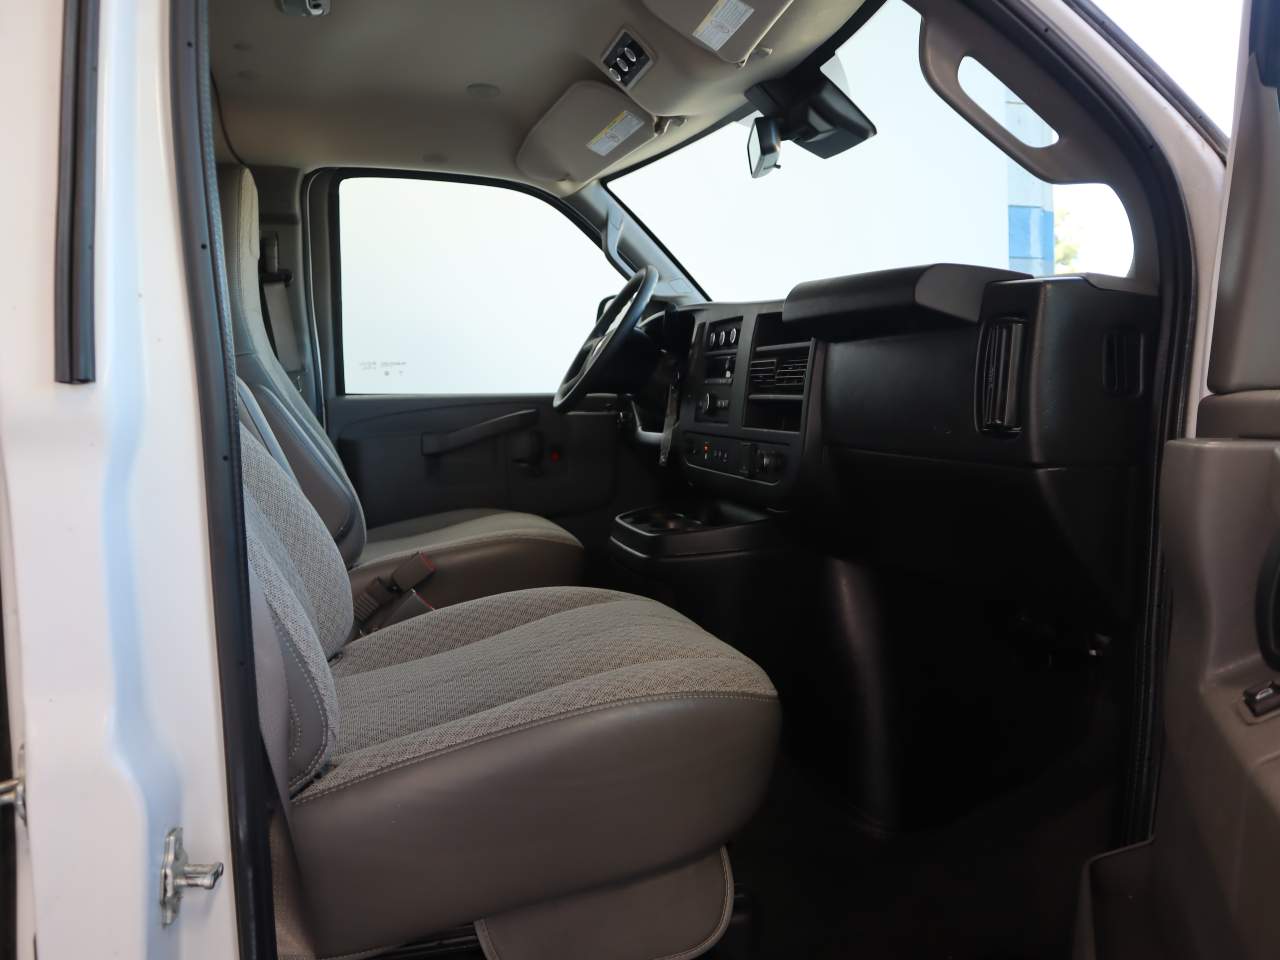 2019 Chevrolet Express LT 3500